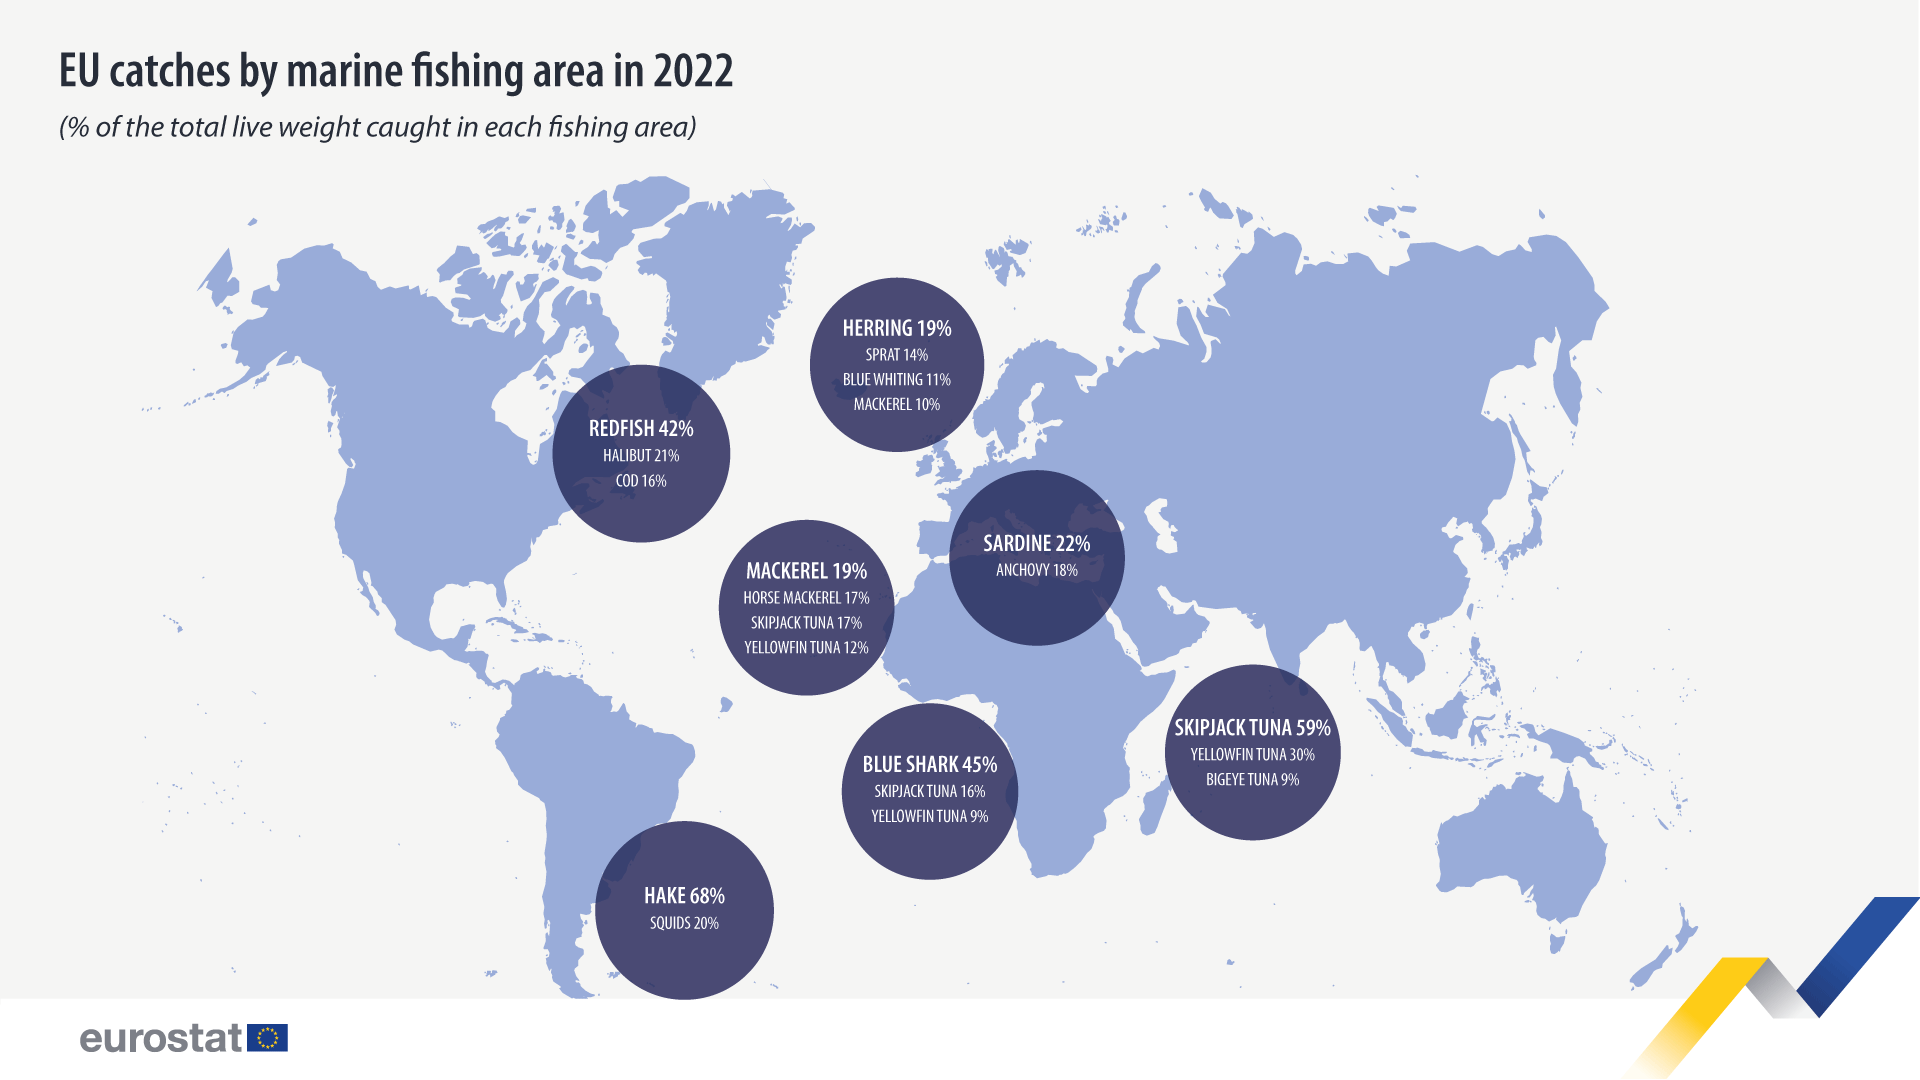 EU 2022 میں سمندری ماہی گیری کے علاقے سے پکڑتا ہے، ہر علاقے میں کل زندہ وزن کا %